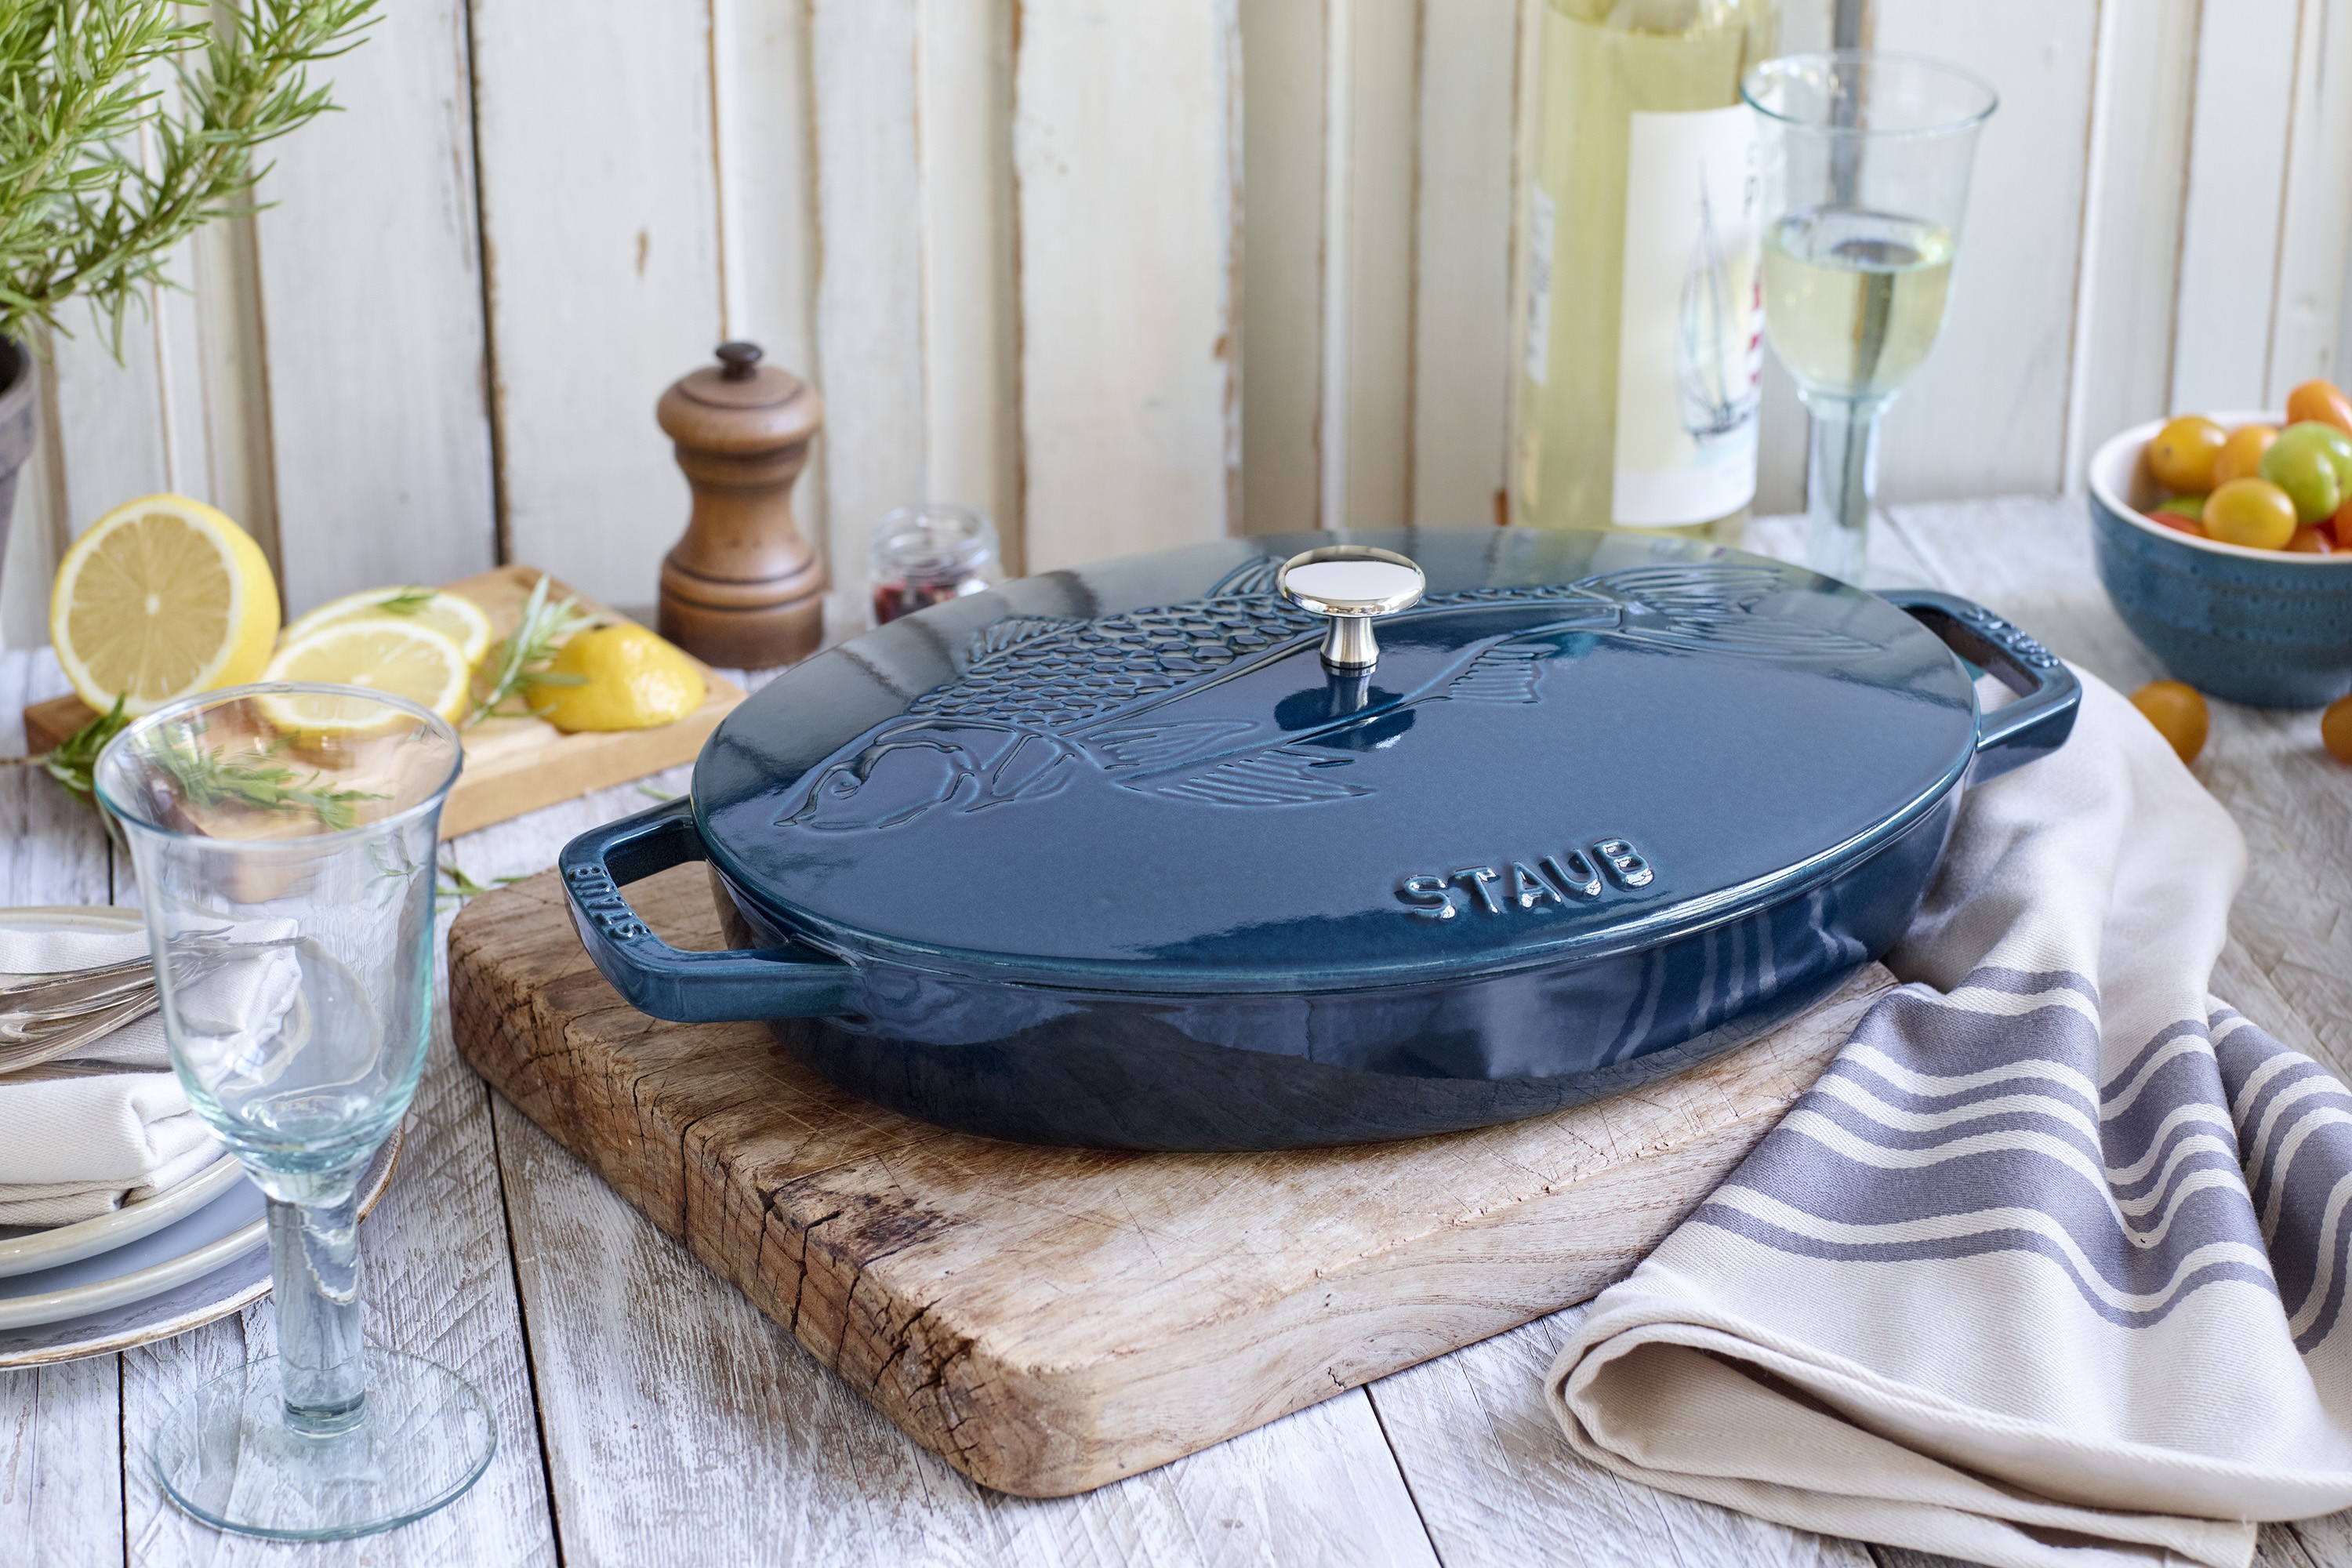 Oval cooking dish, cast iron, 33cm/2.8L, La Mer - Staub